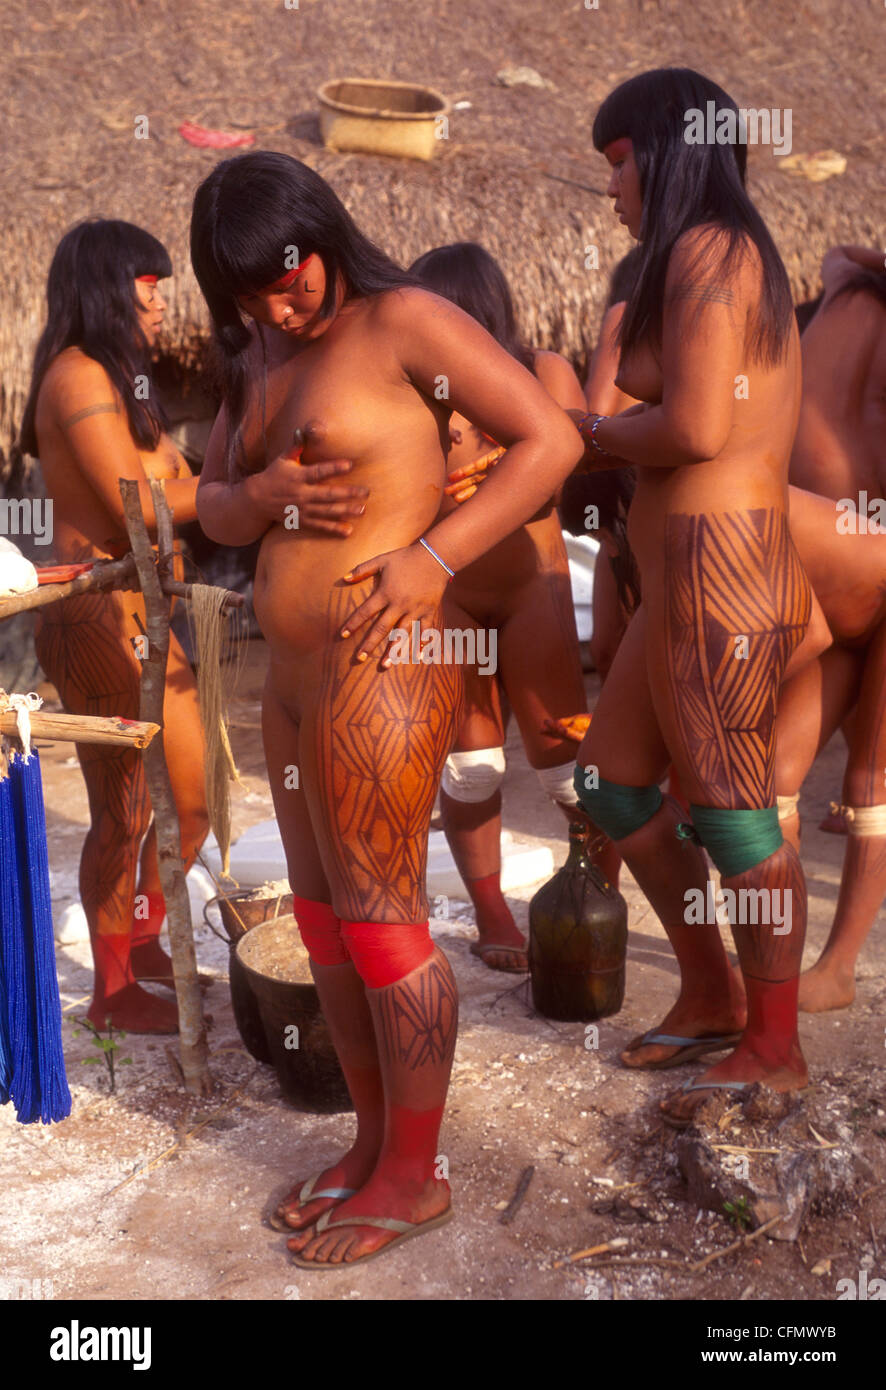 Порно фото африканских племен